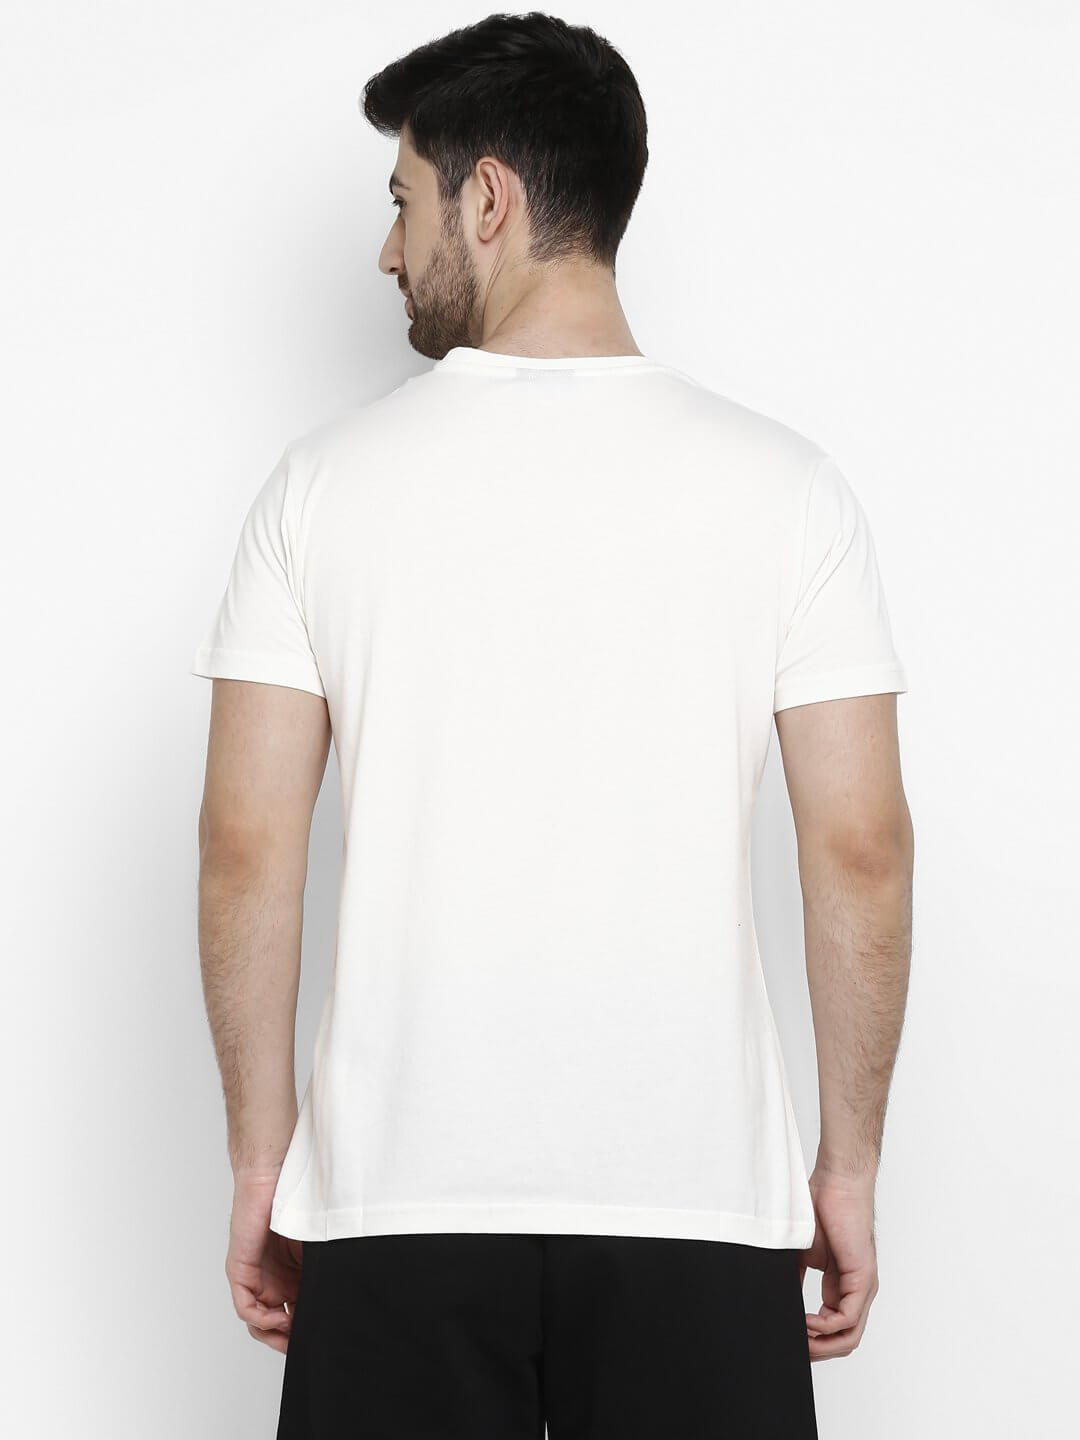 Zia White T-Shirts for Men